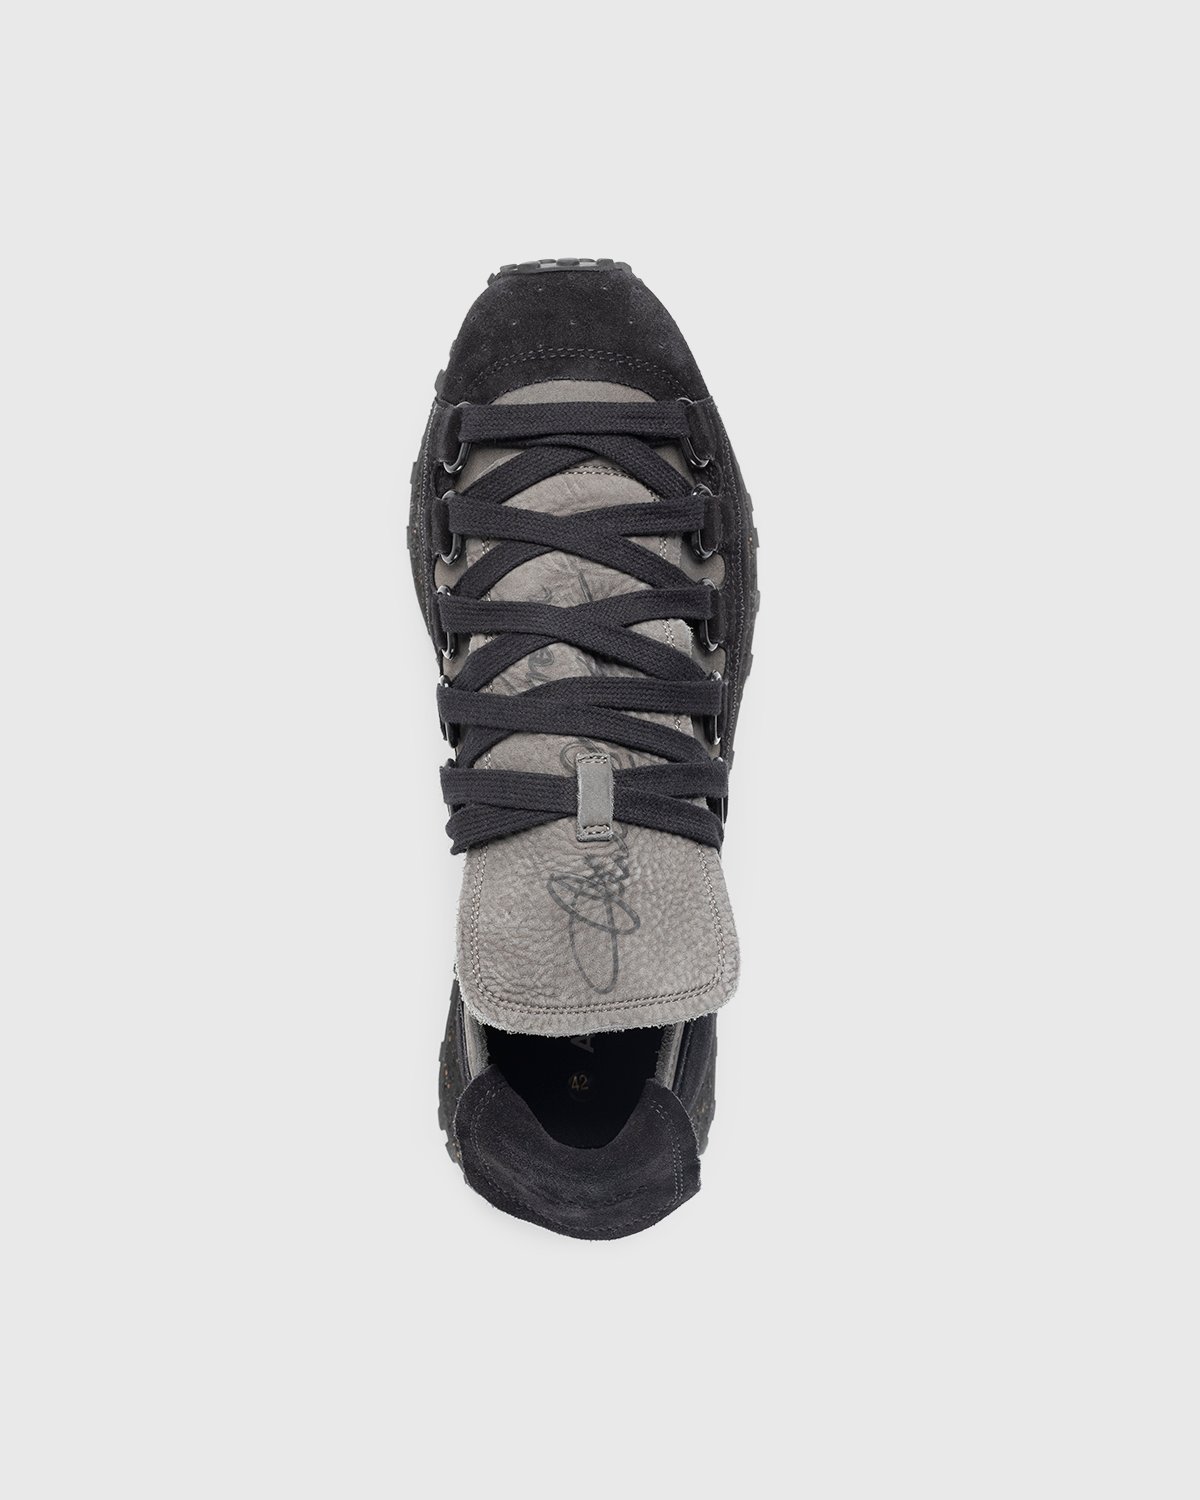 Acne Studios - Nofo Lace-Up Sneakers Grey/Black - Footwear - Black - Image 5